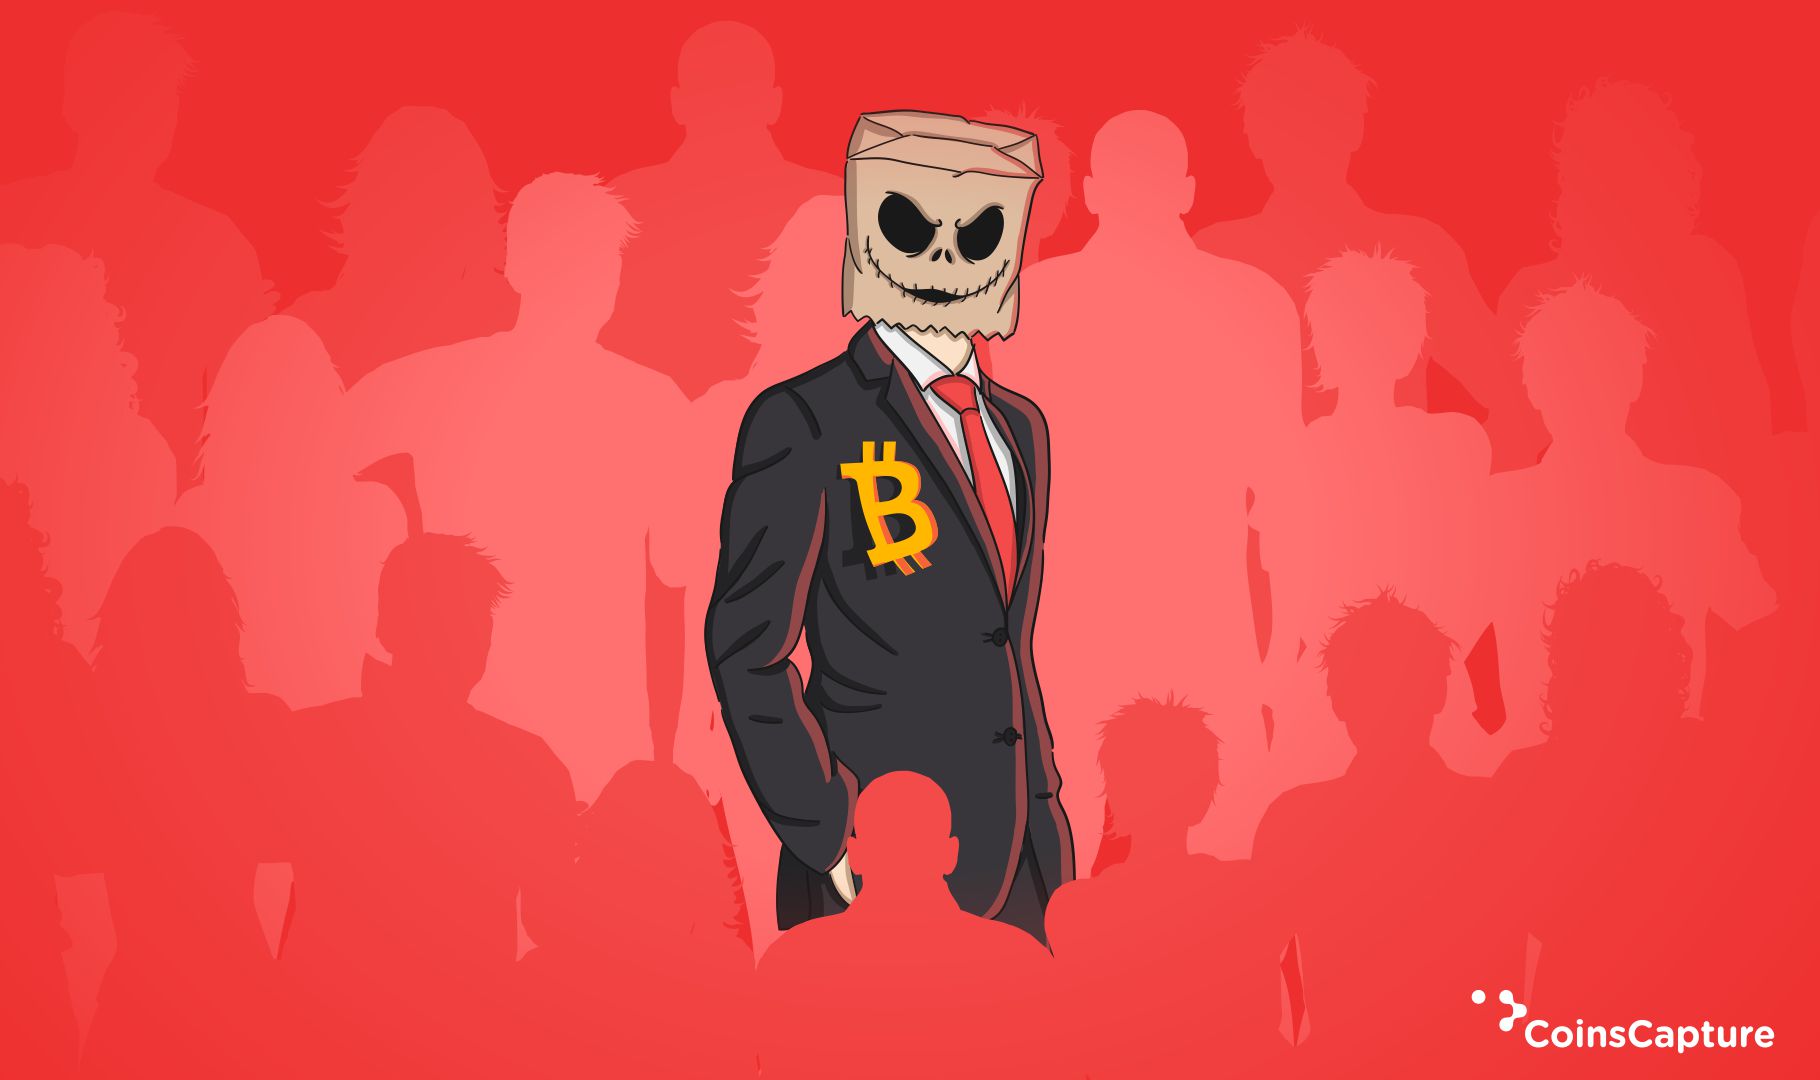 Why The Famous Bitcoin Creator - Satoshi Nakamoto Is Anonymous?